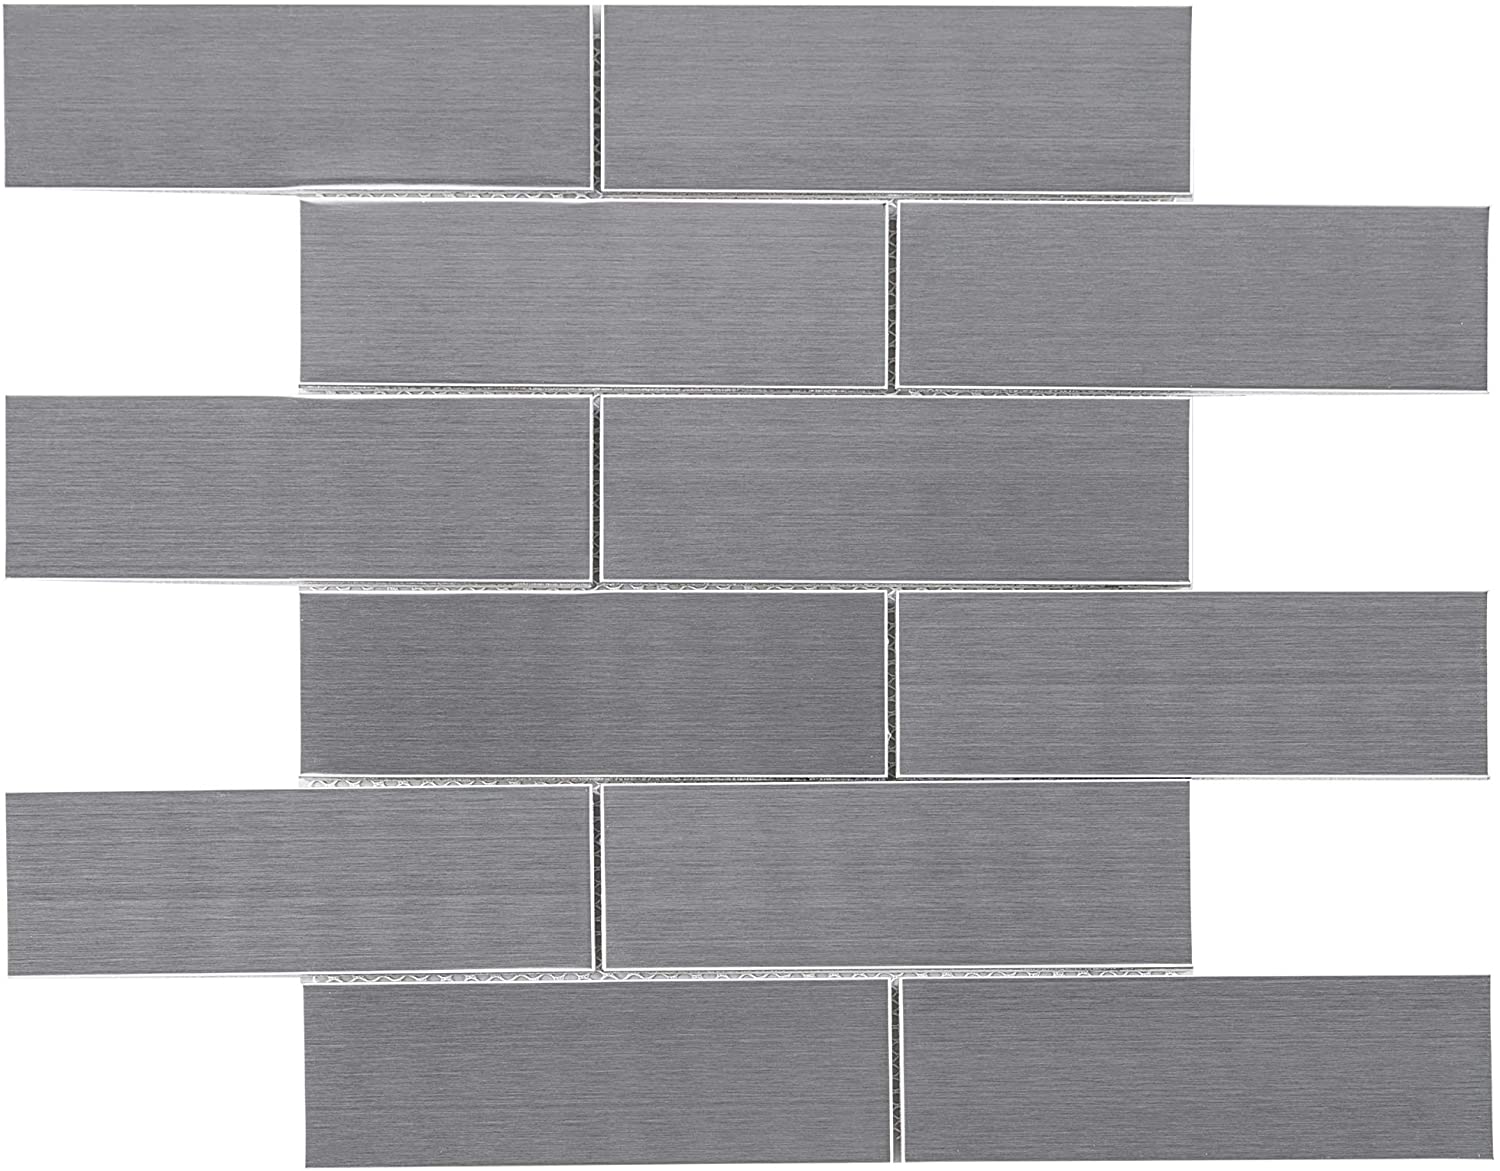 2X6 Stainless Steel Brick Metallic Subway Mosaic Wall Tile for Kitchen Backsplash, Bathroom Shower, Accent Decor